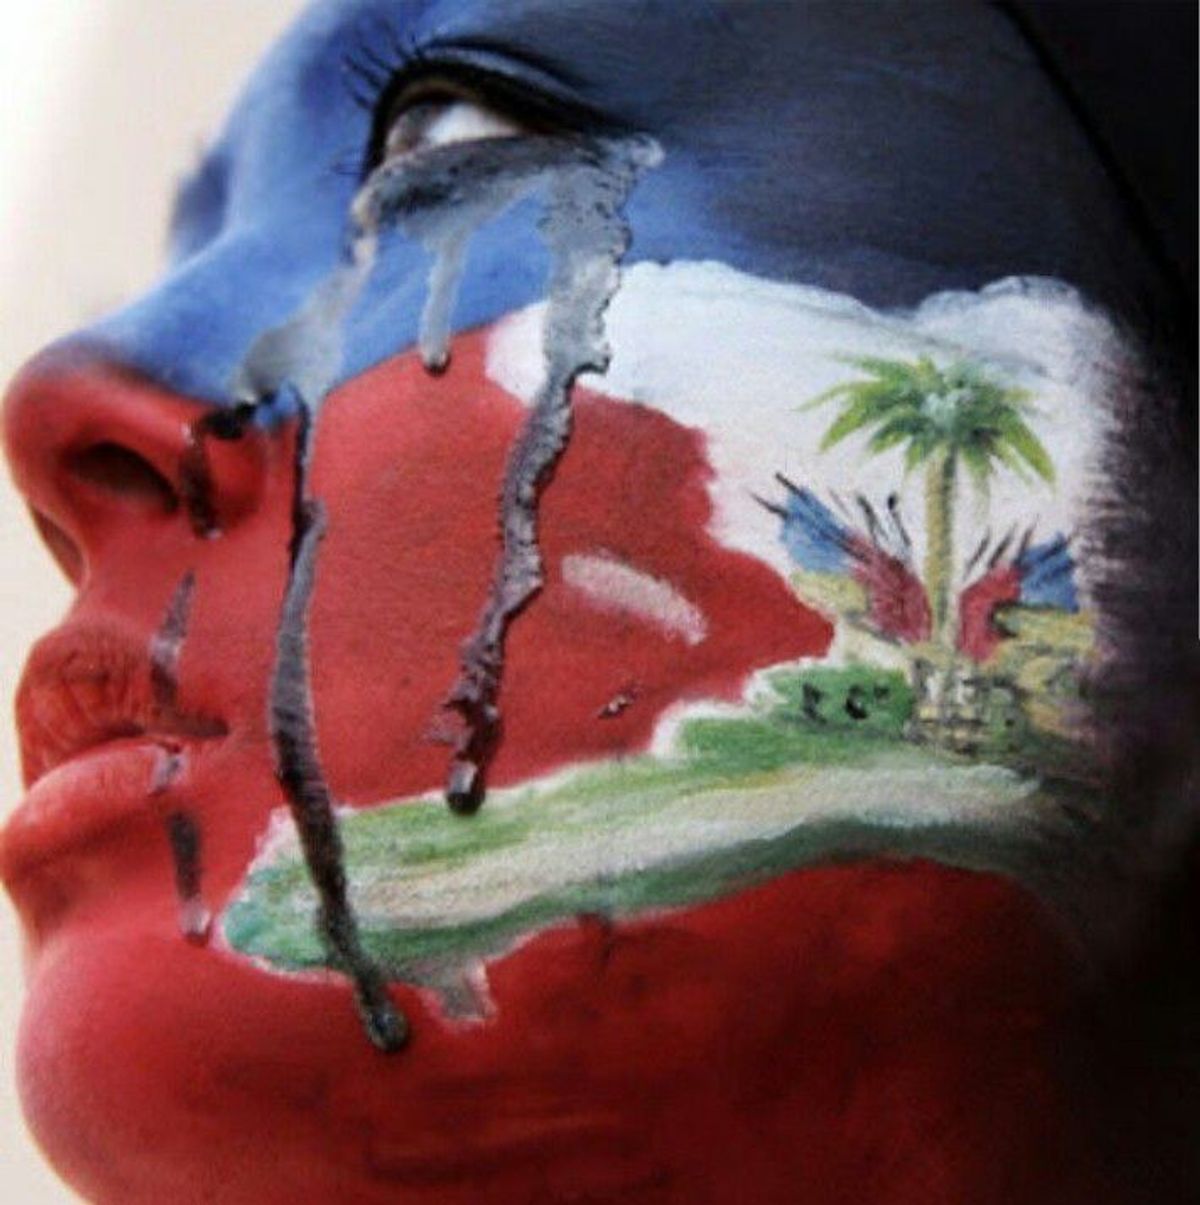 Where's My 'Pray for Haiti' Facebook Filter?